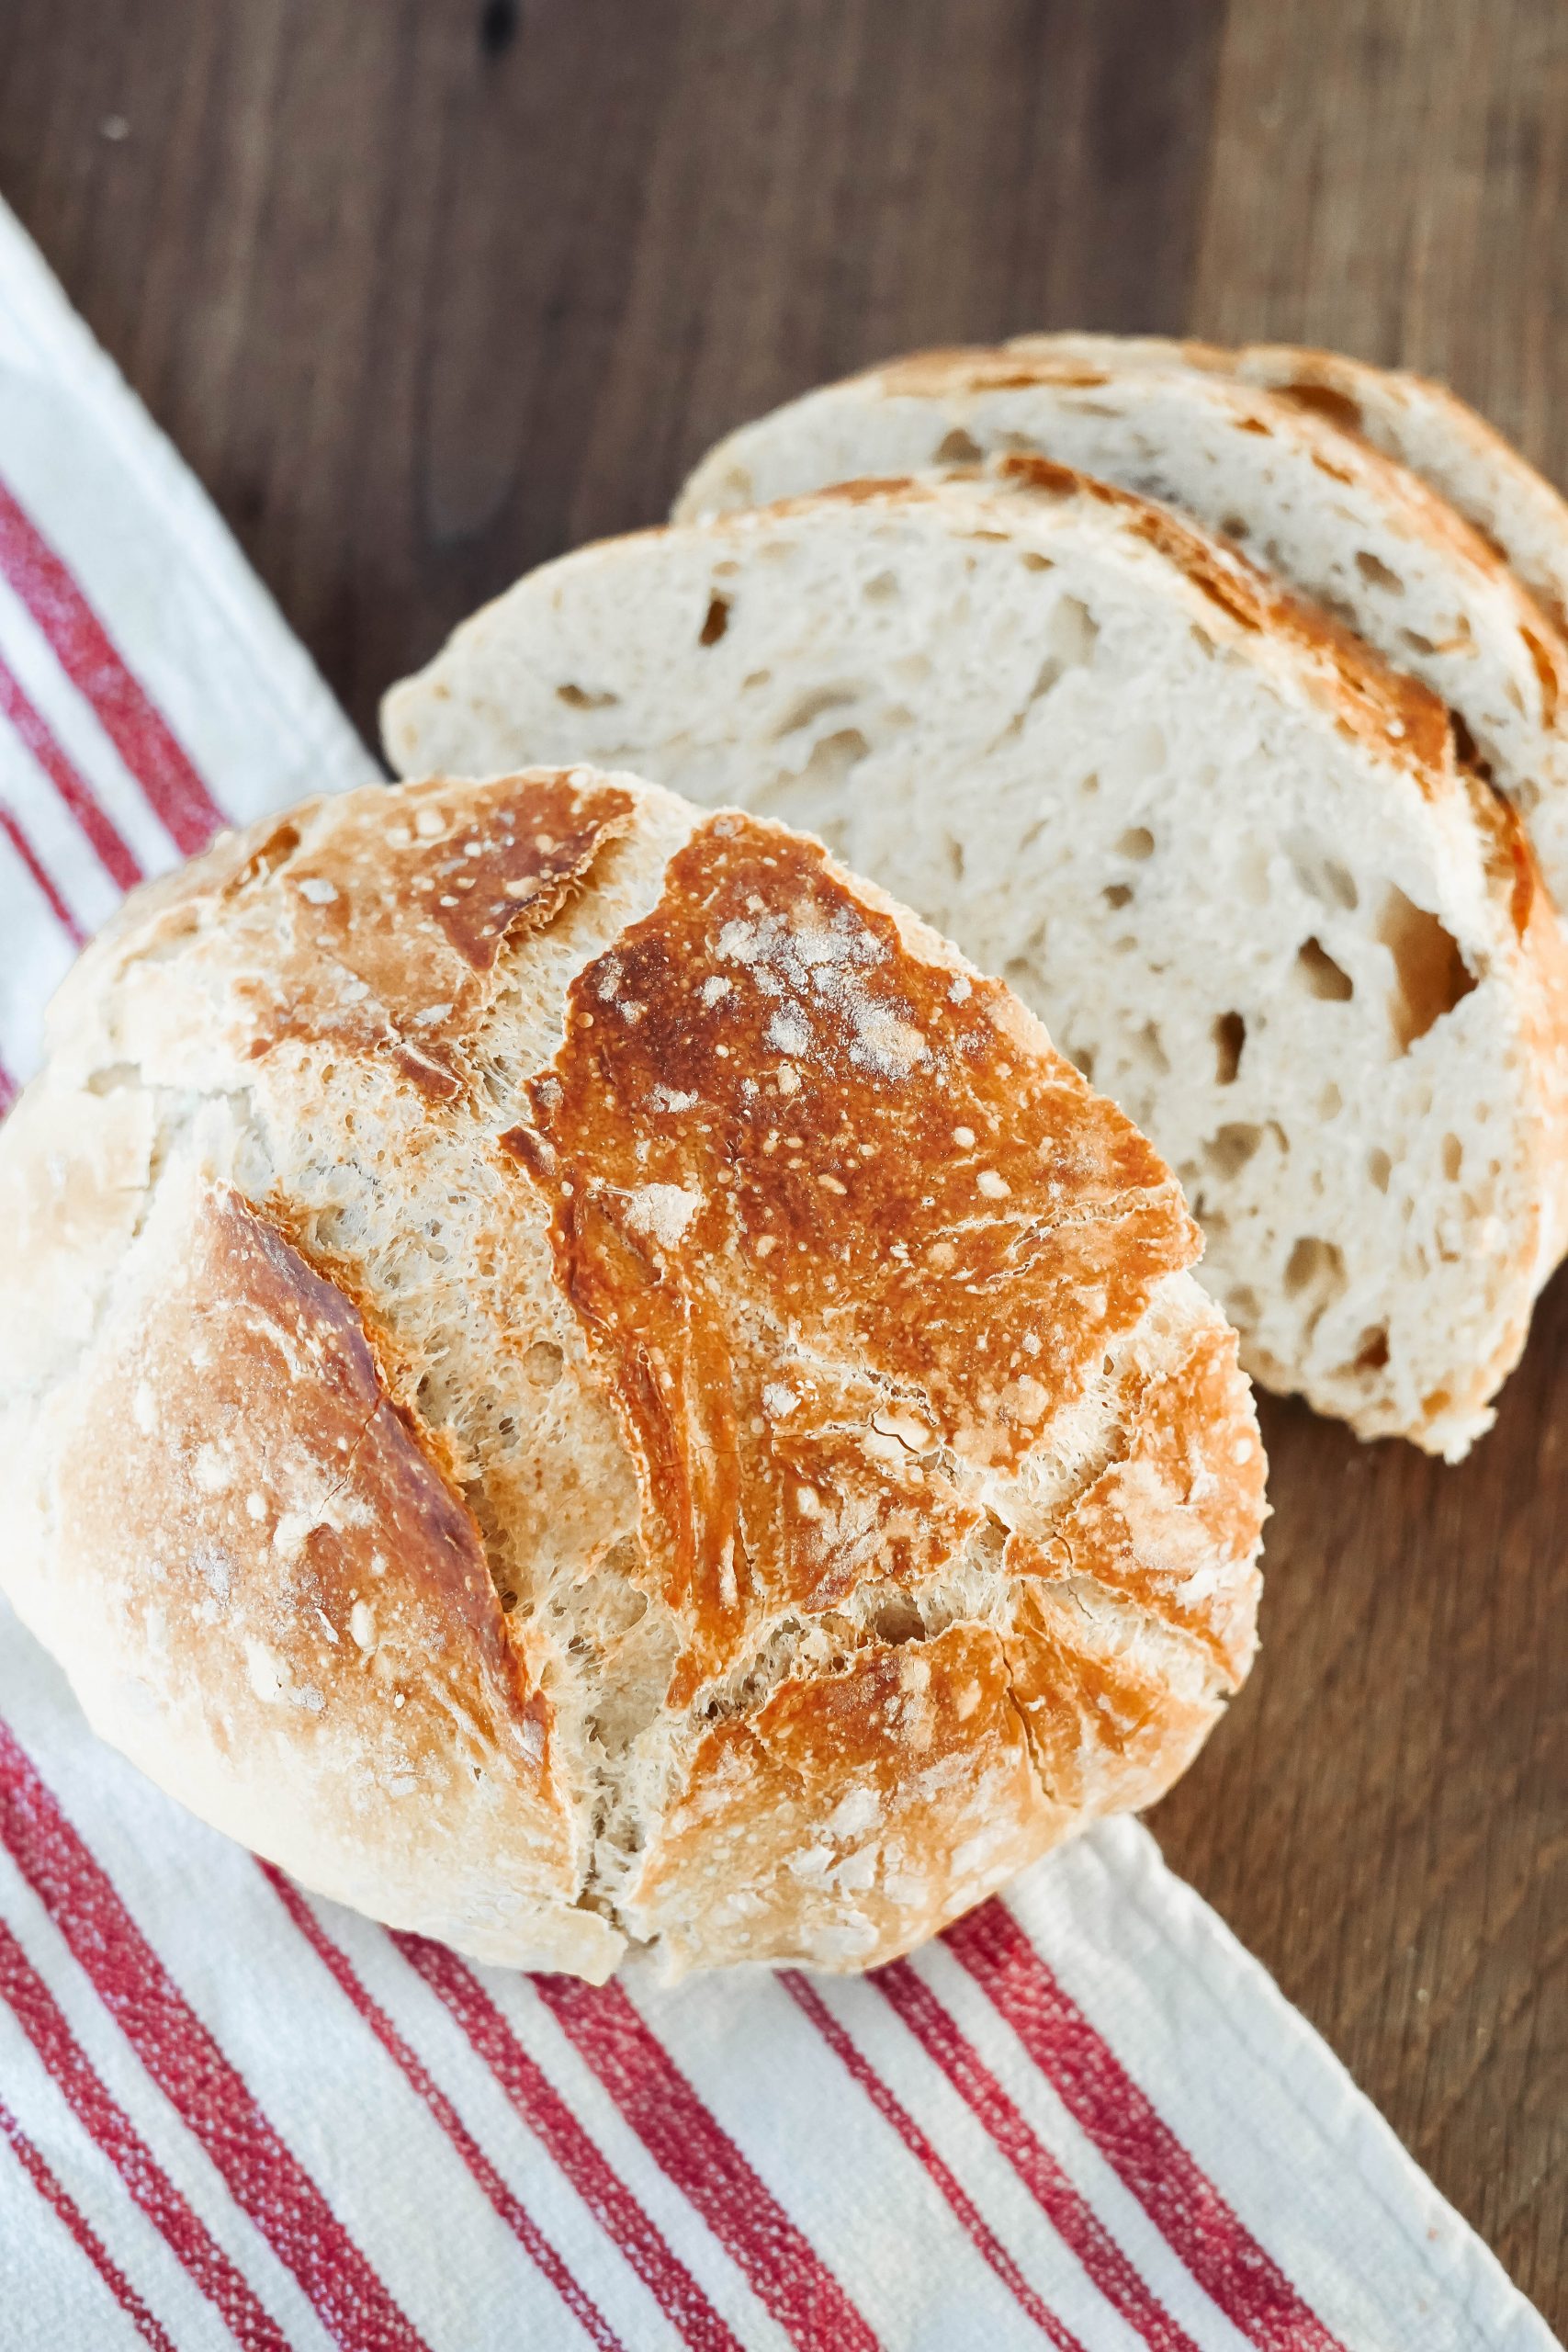 https://redwhitedenim.com/wp-content/uploads/2021/01/Easy-Dutch-Oven-Bread-Recipe-No-Knead-10-scaled.jpg